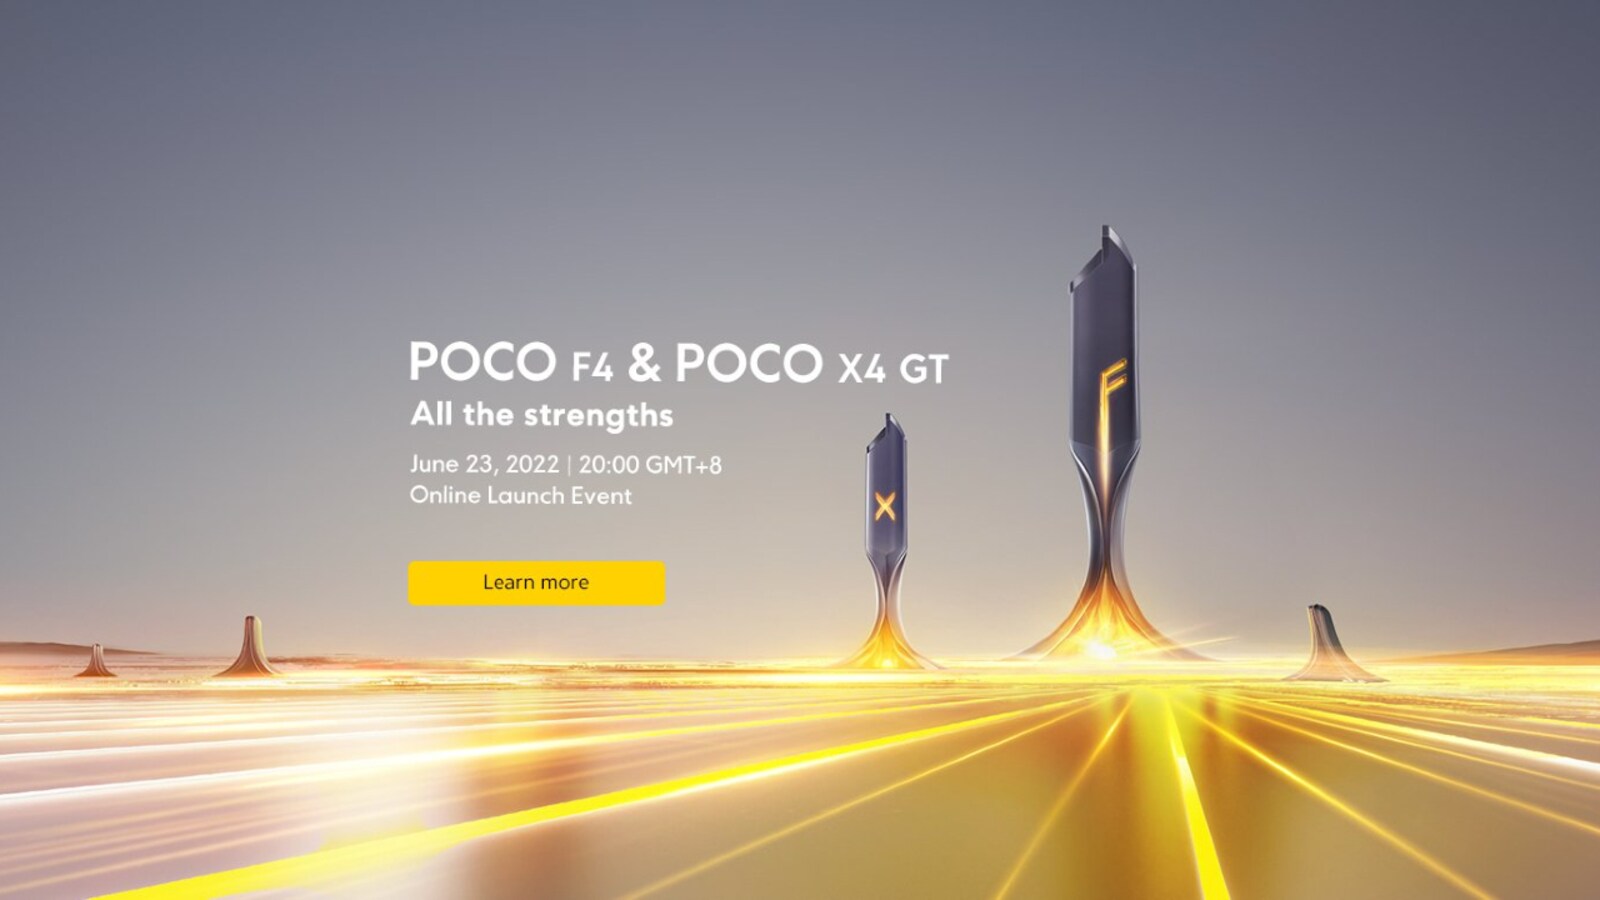 Poco X4 GT: Poco F4 5G, Poco X4 GT to debut globally on June 23